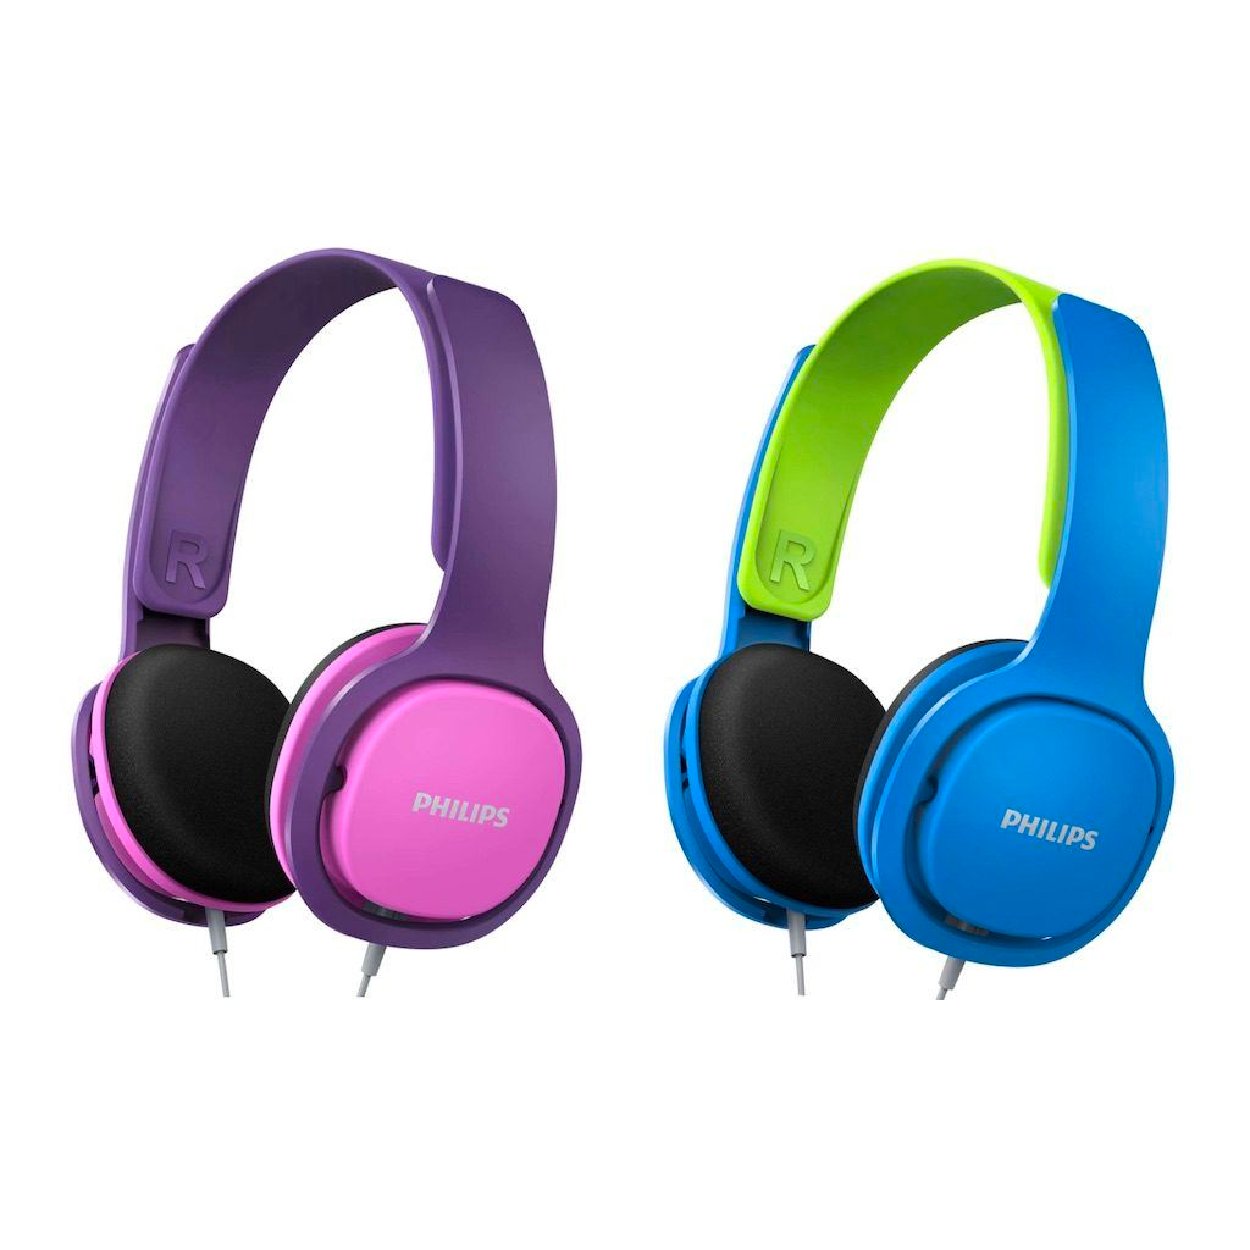 Philips Kids Wired Headphones - Blue